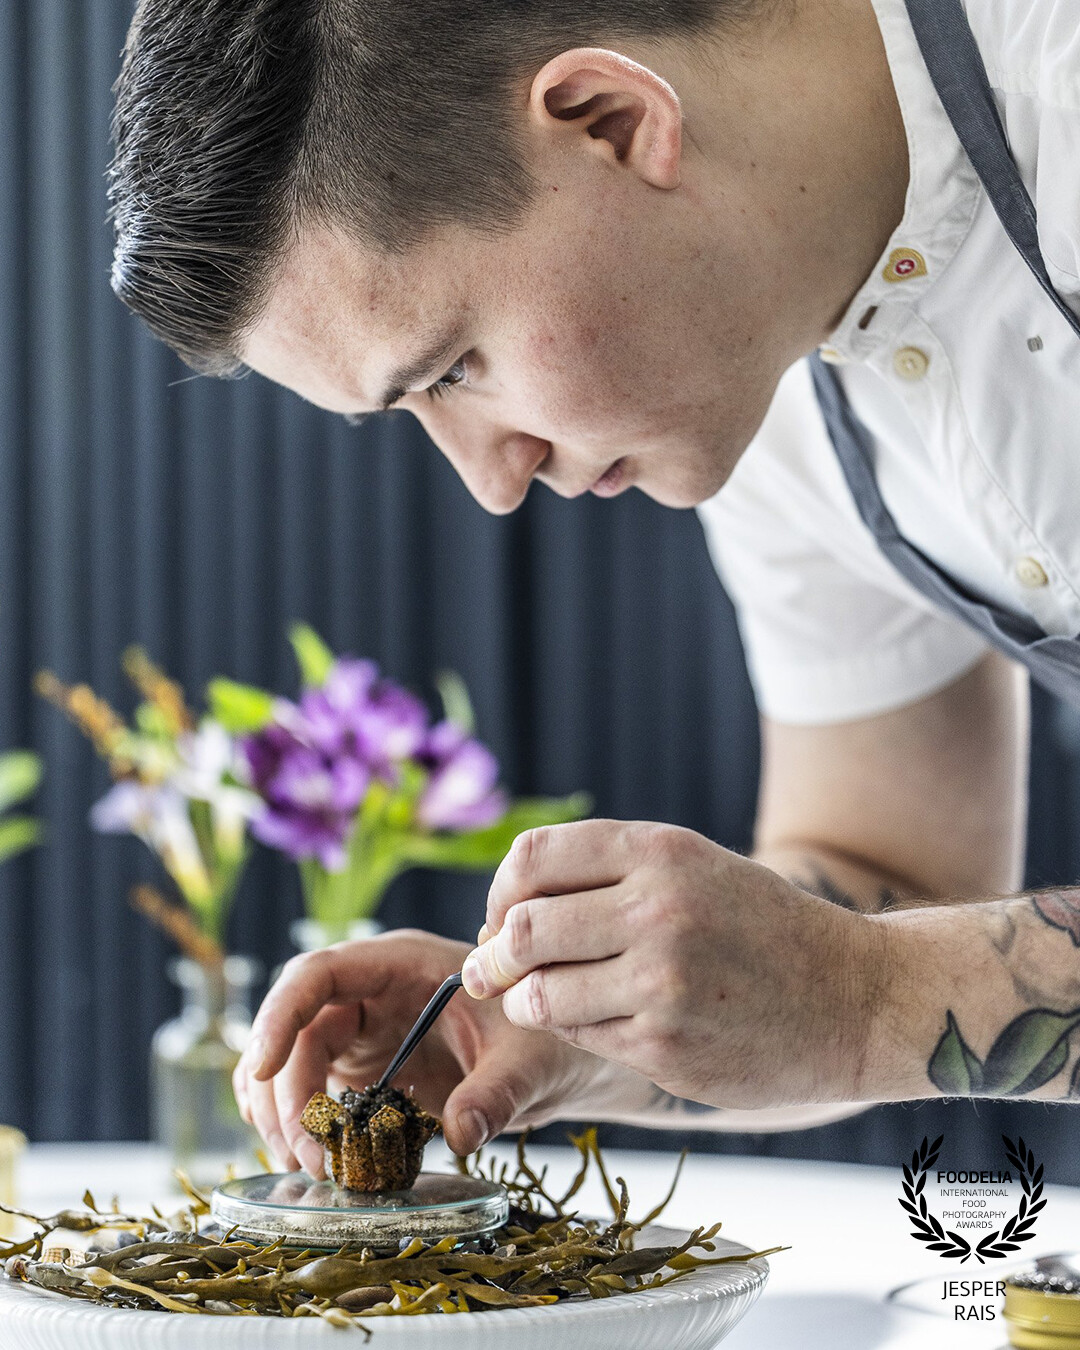 Photoshoot for Antonius Caviar with talented chef Christian Nurup at Hotel Scheelsminde i Denmark.